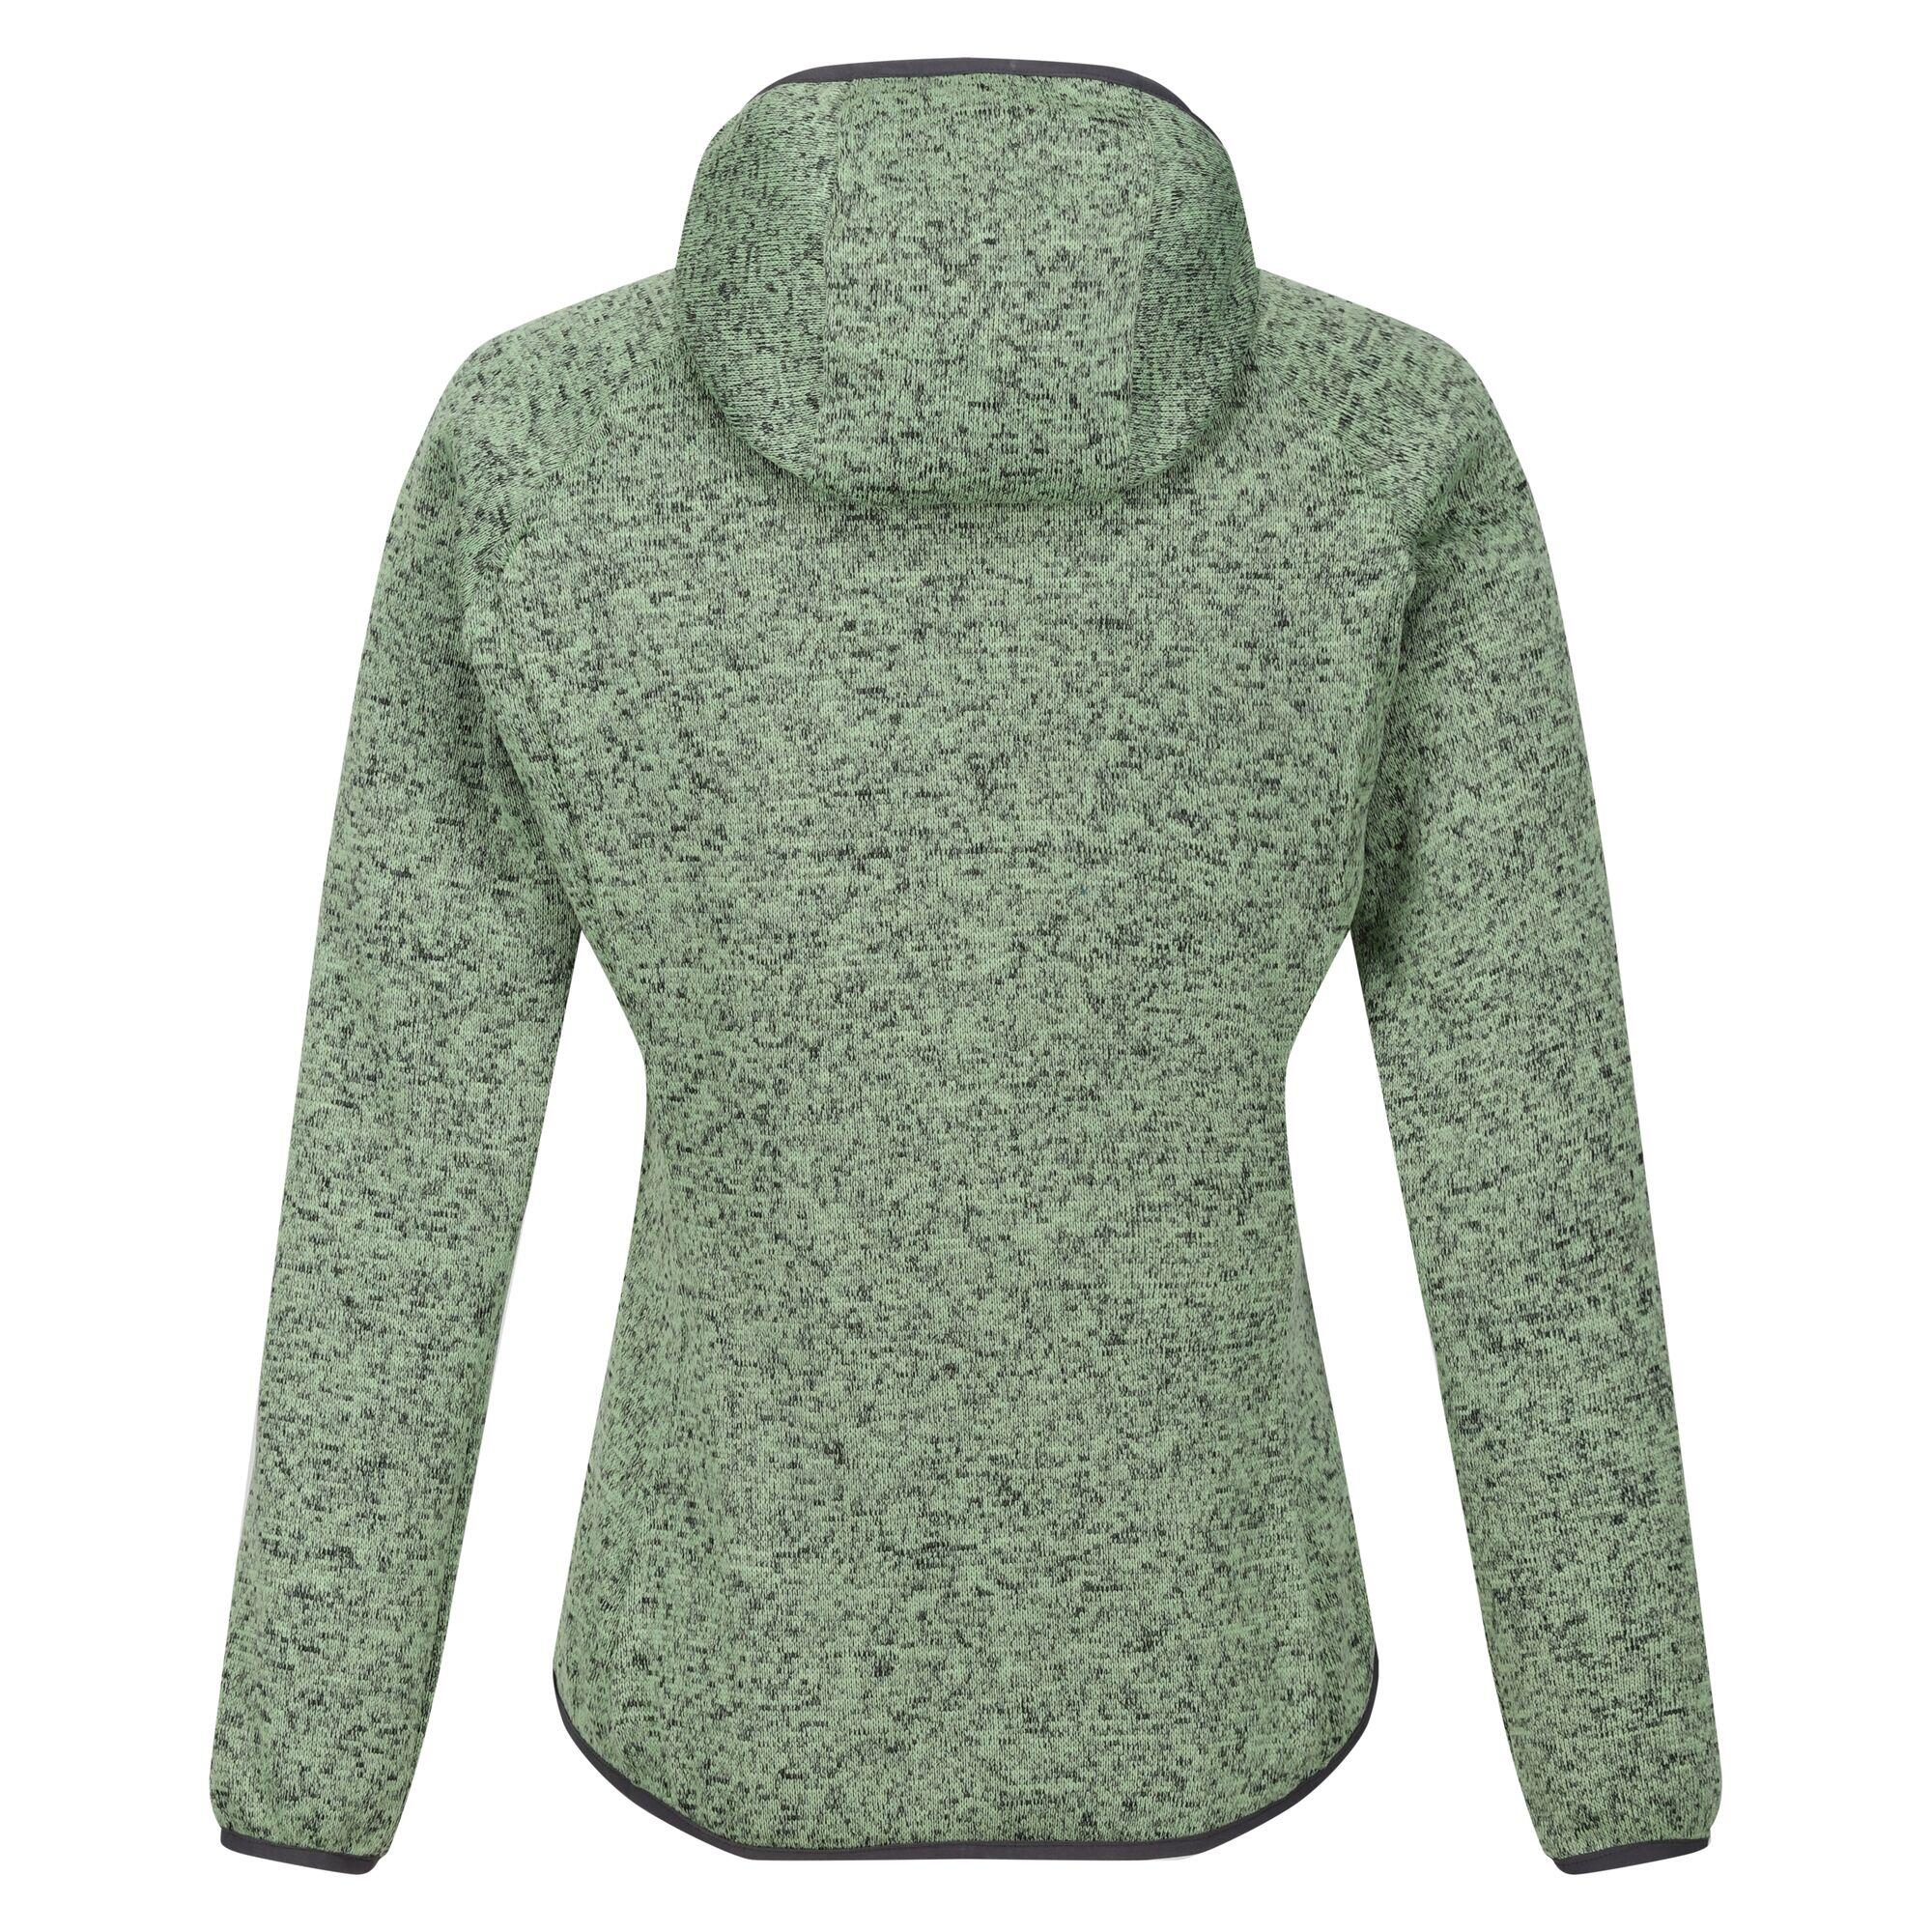 Womens/Ladies Newhill Marl Hooded Fleece Jacket (Quiet Green) 2/5